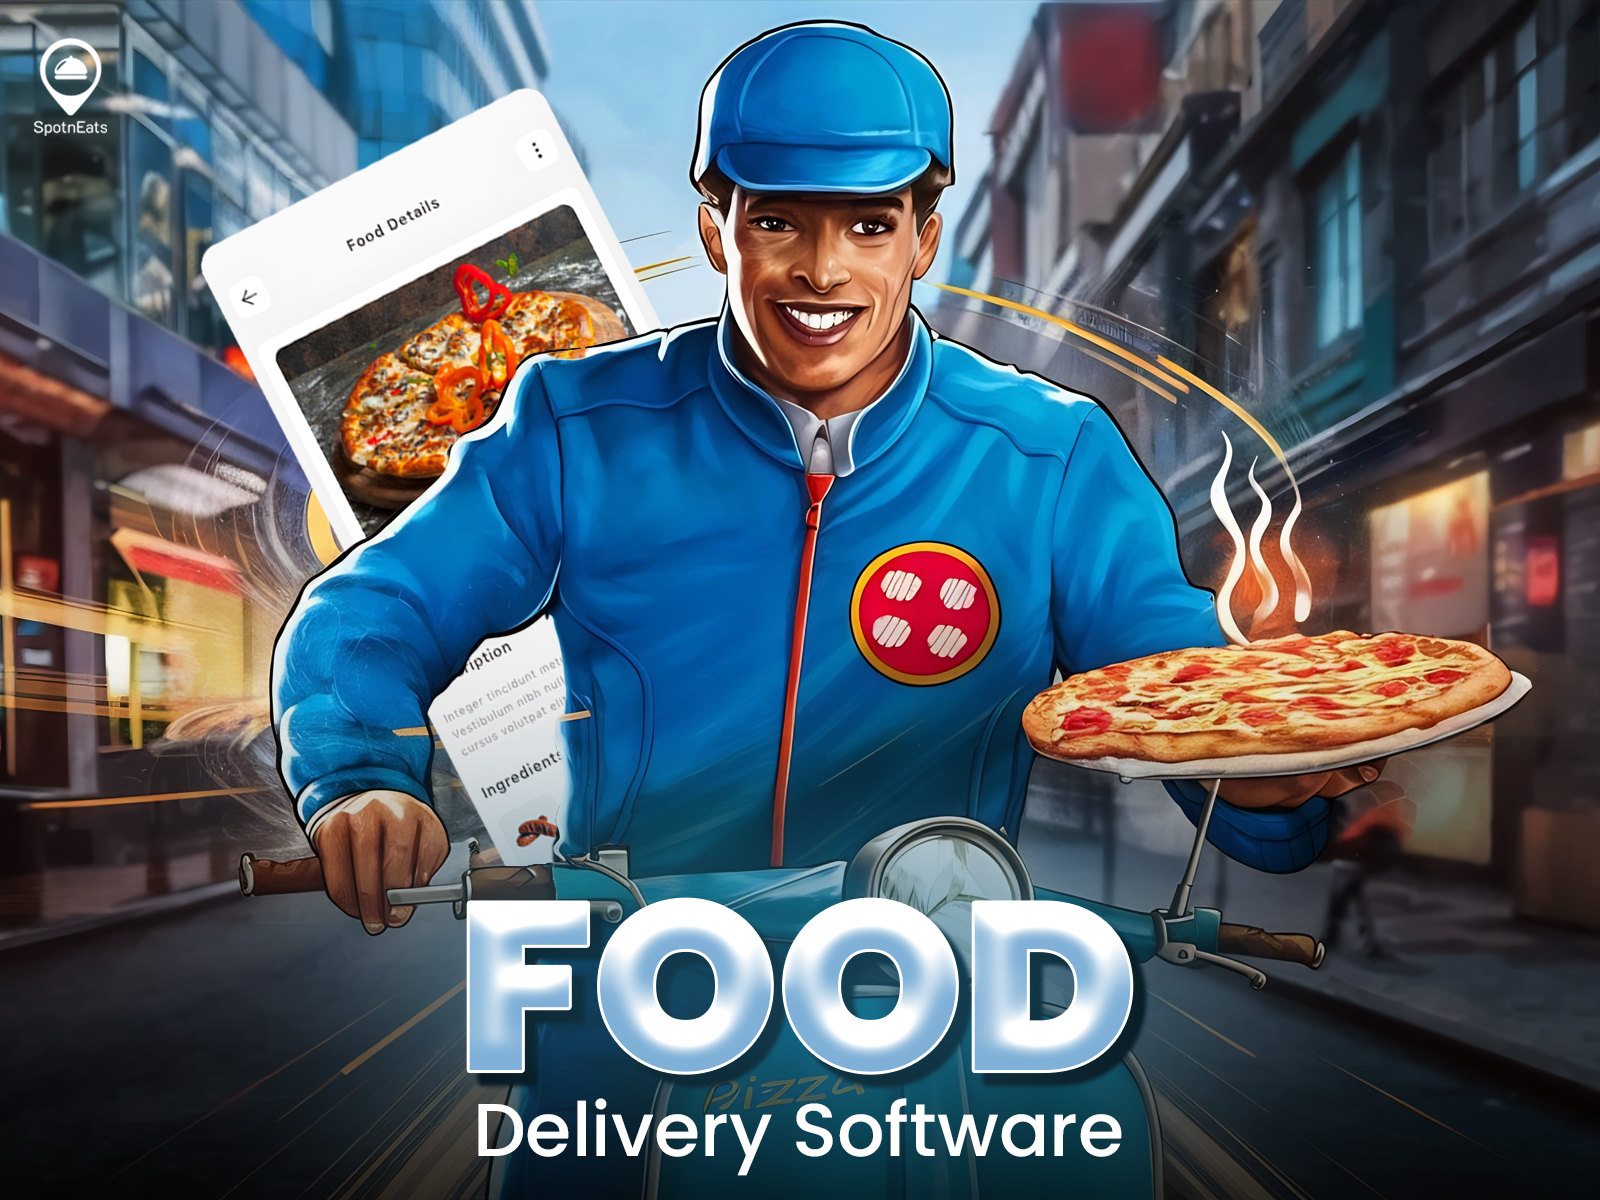  Food ordering and restaurant management software development